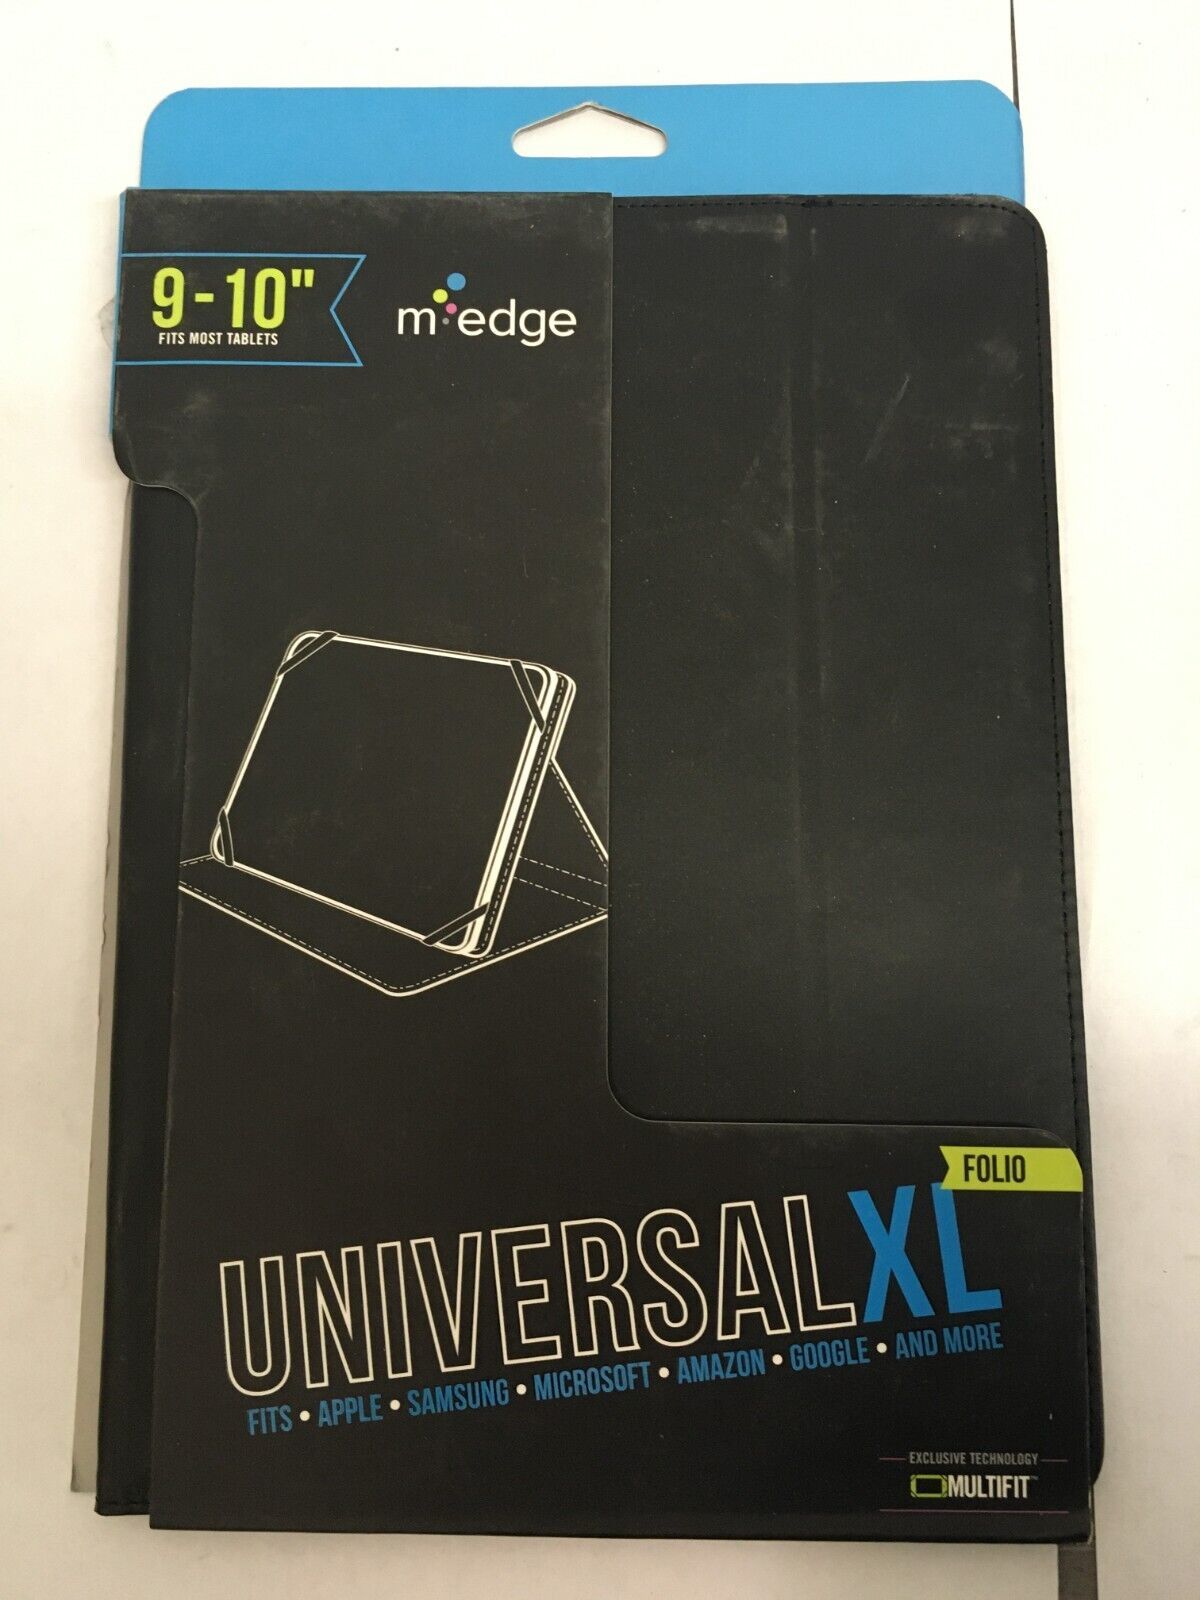 9-10" m edge UNUIVERSAL XL folio fits most tablets - $9.74